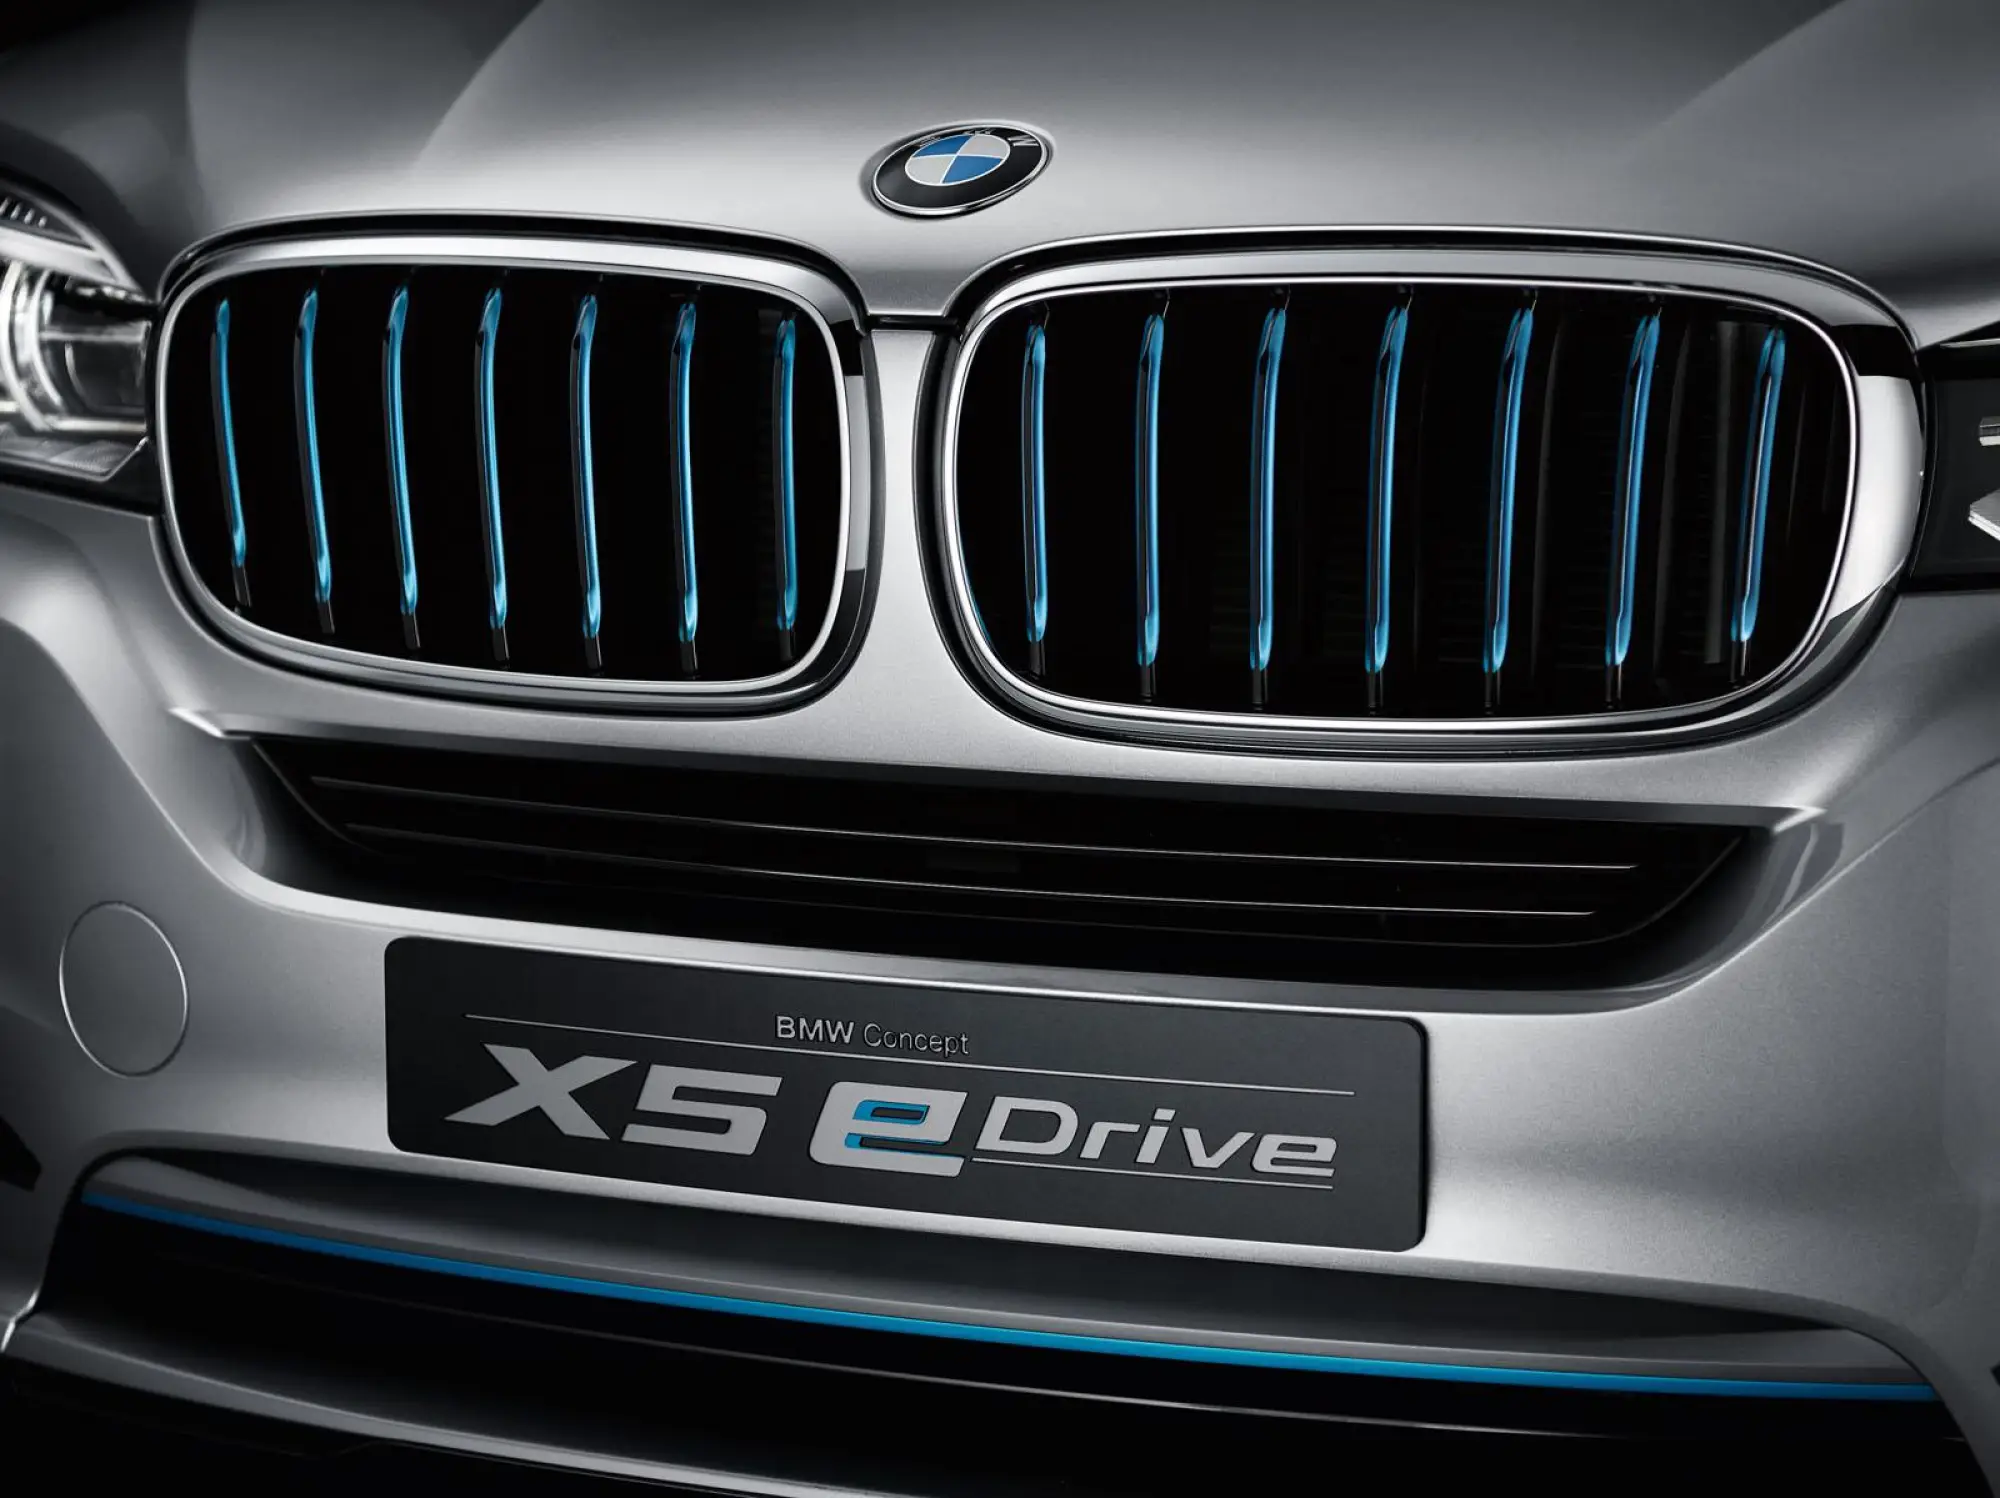 BMW X5 eDrive Concept - 2